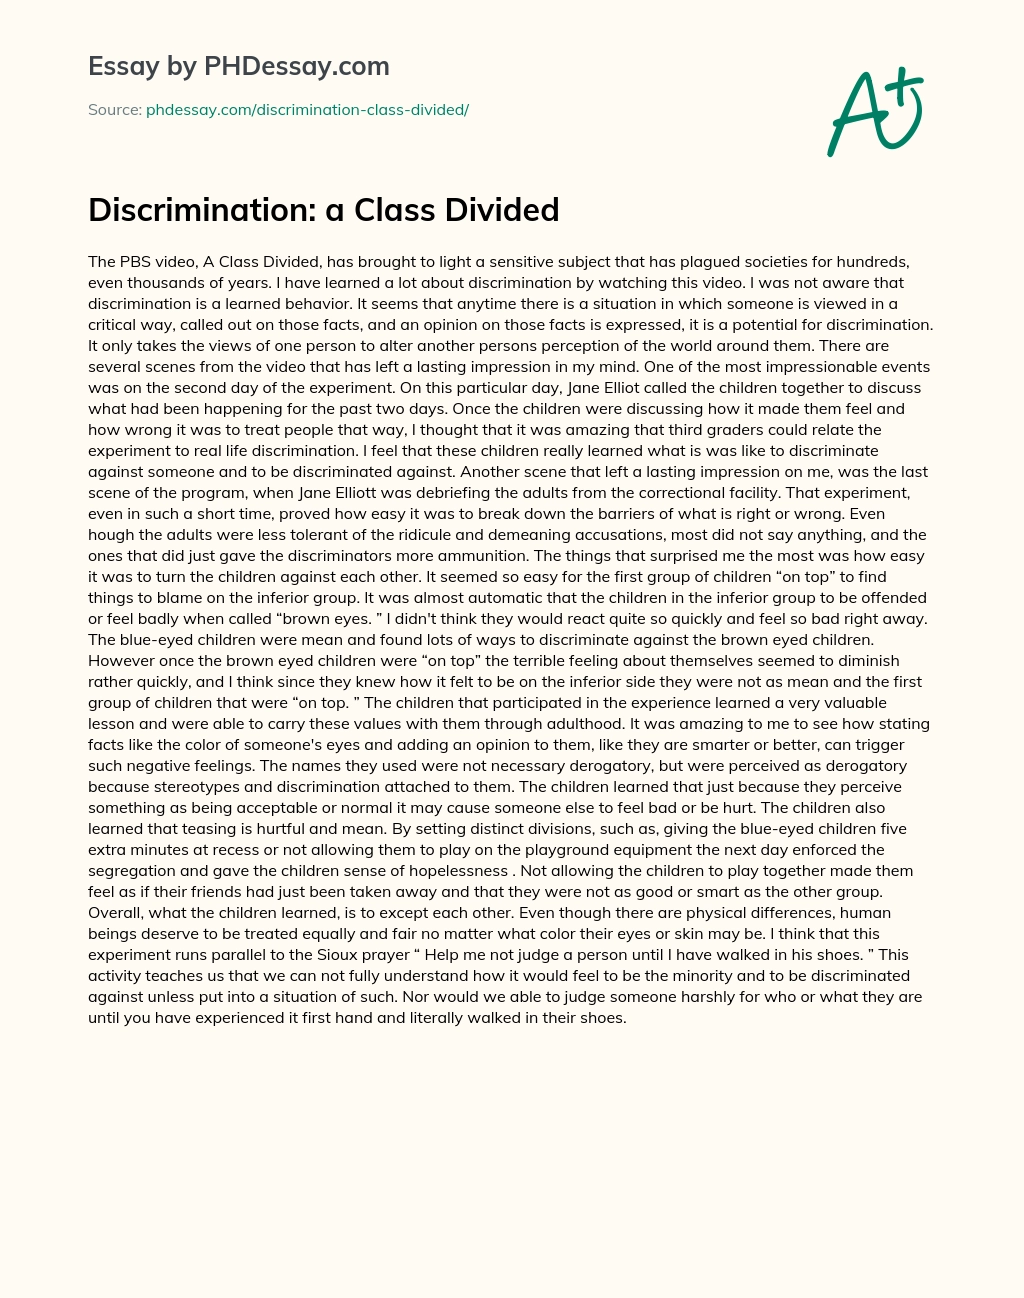 Discrimination: a Class Divided essay